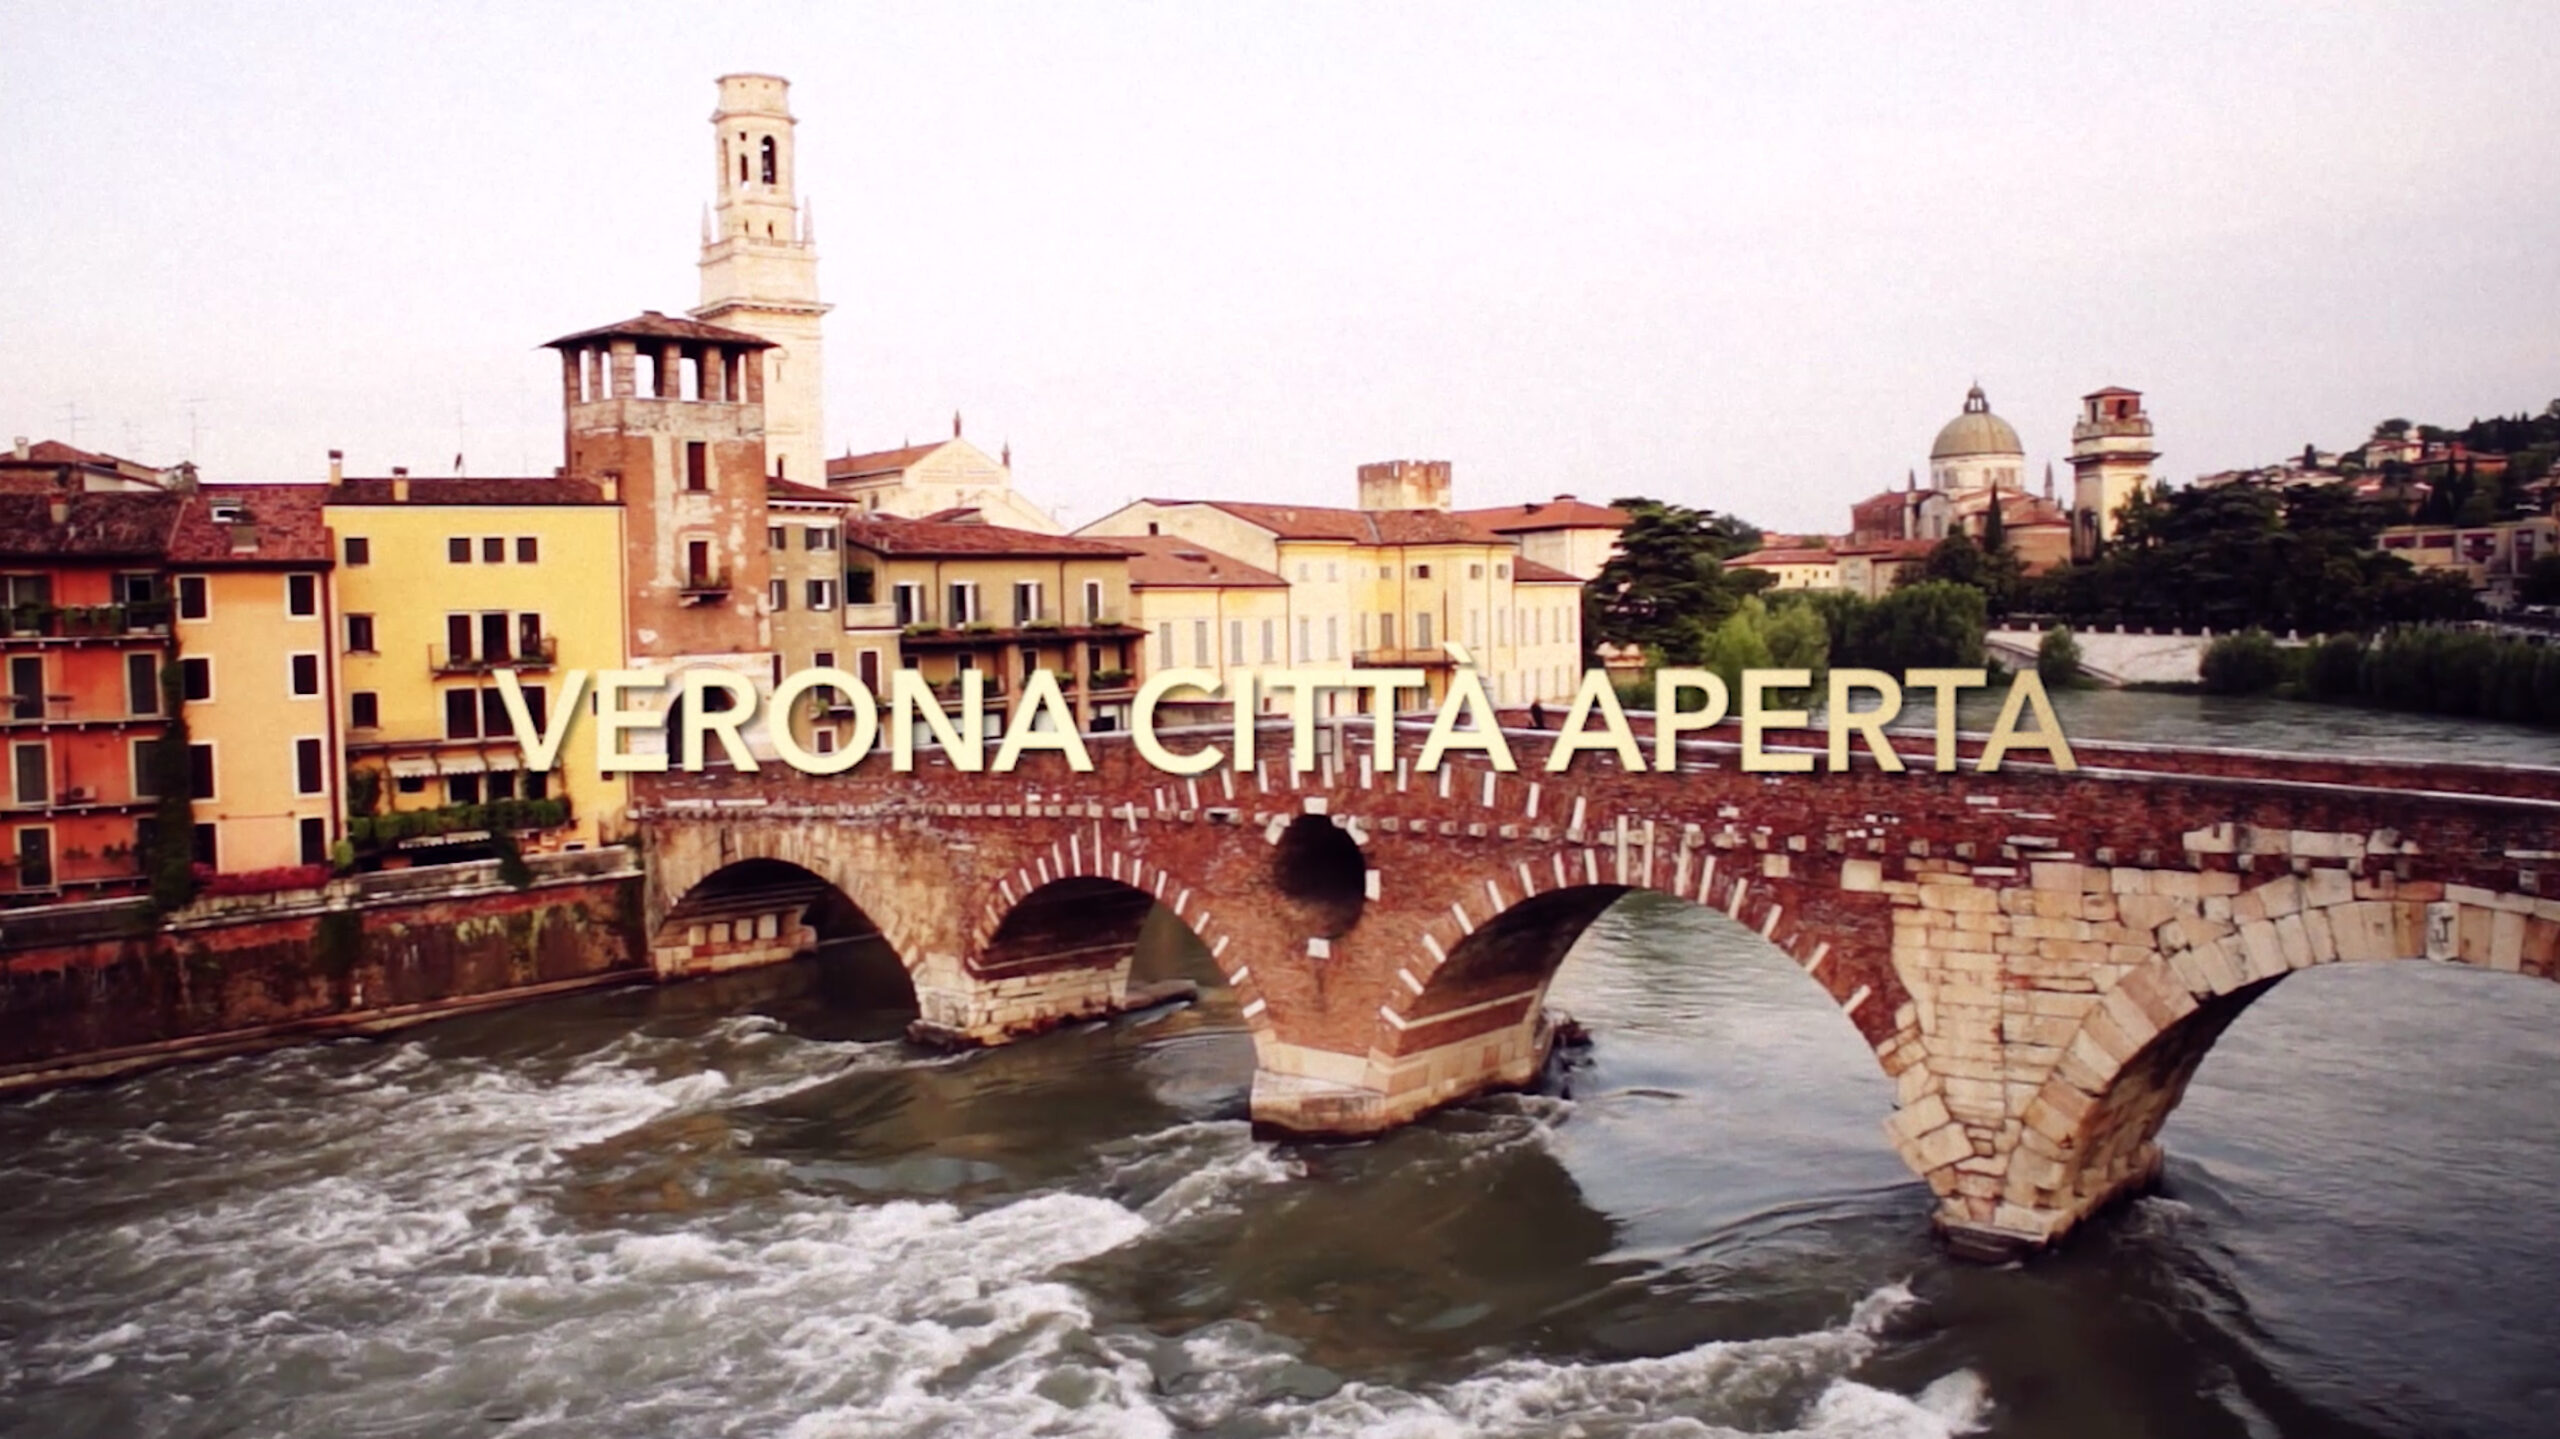 VERONA CITTA APERTA. DISCOVERING THE ROMAN CITY